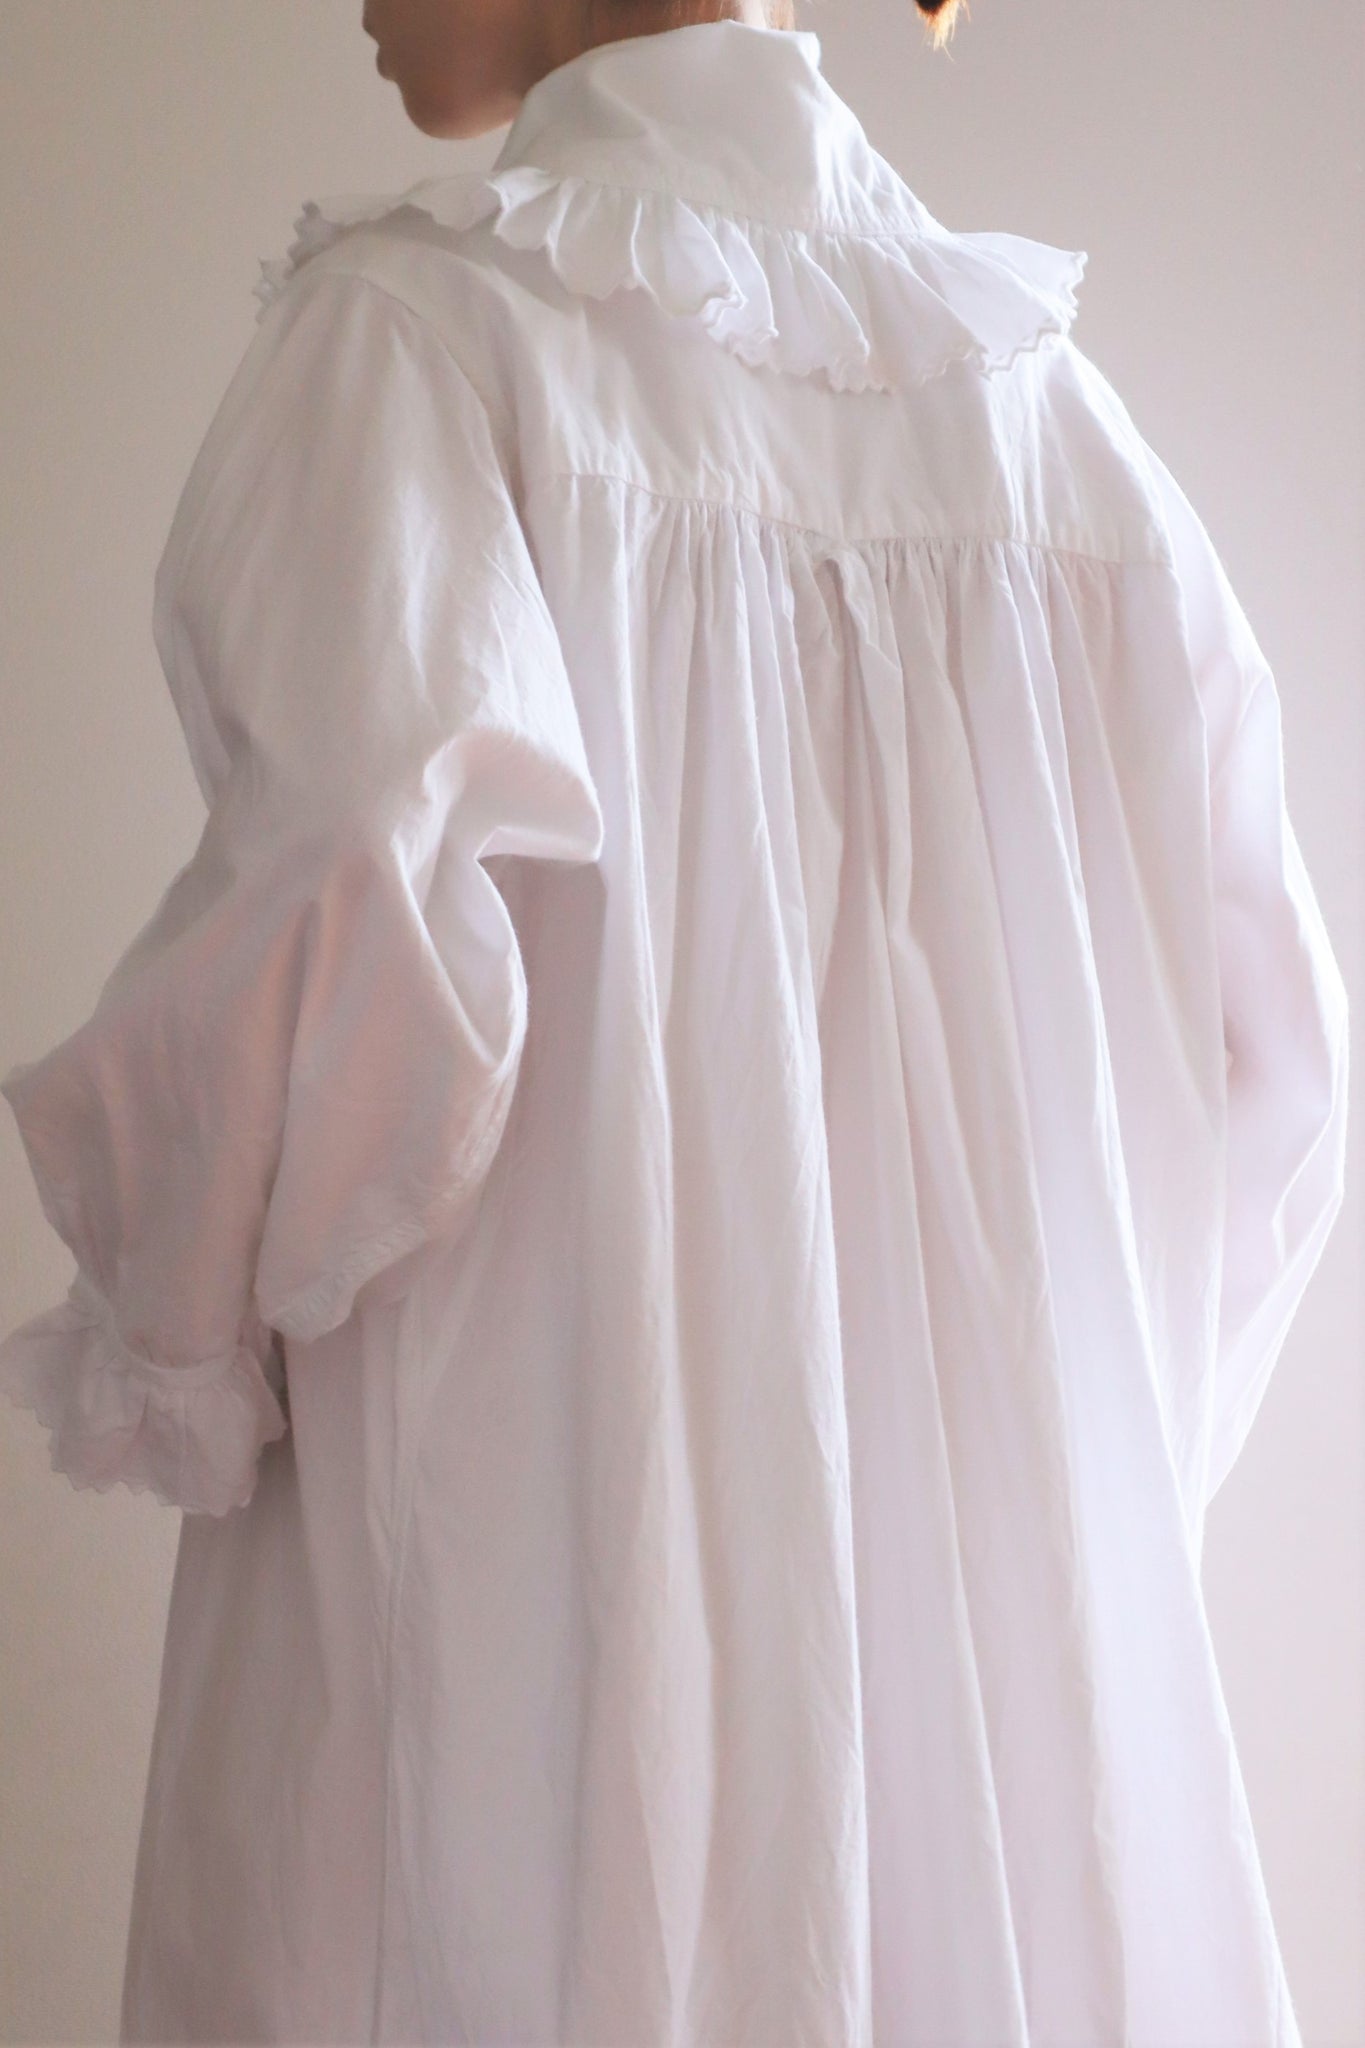 A Vintage Victorian Style Cotton Night Dress